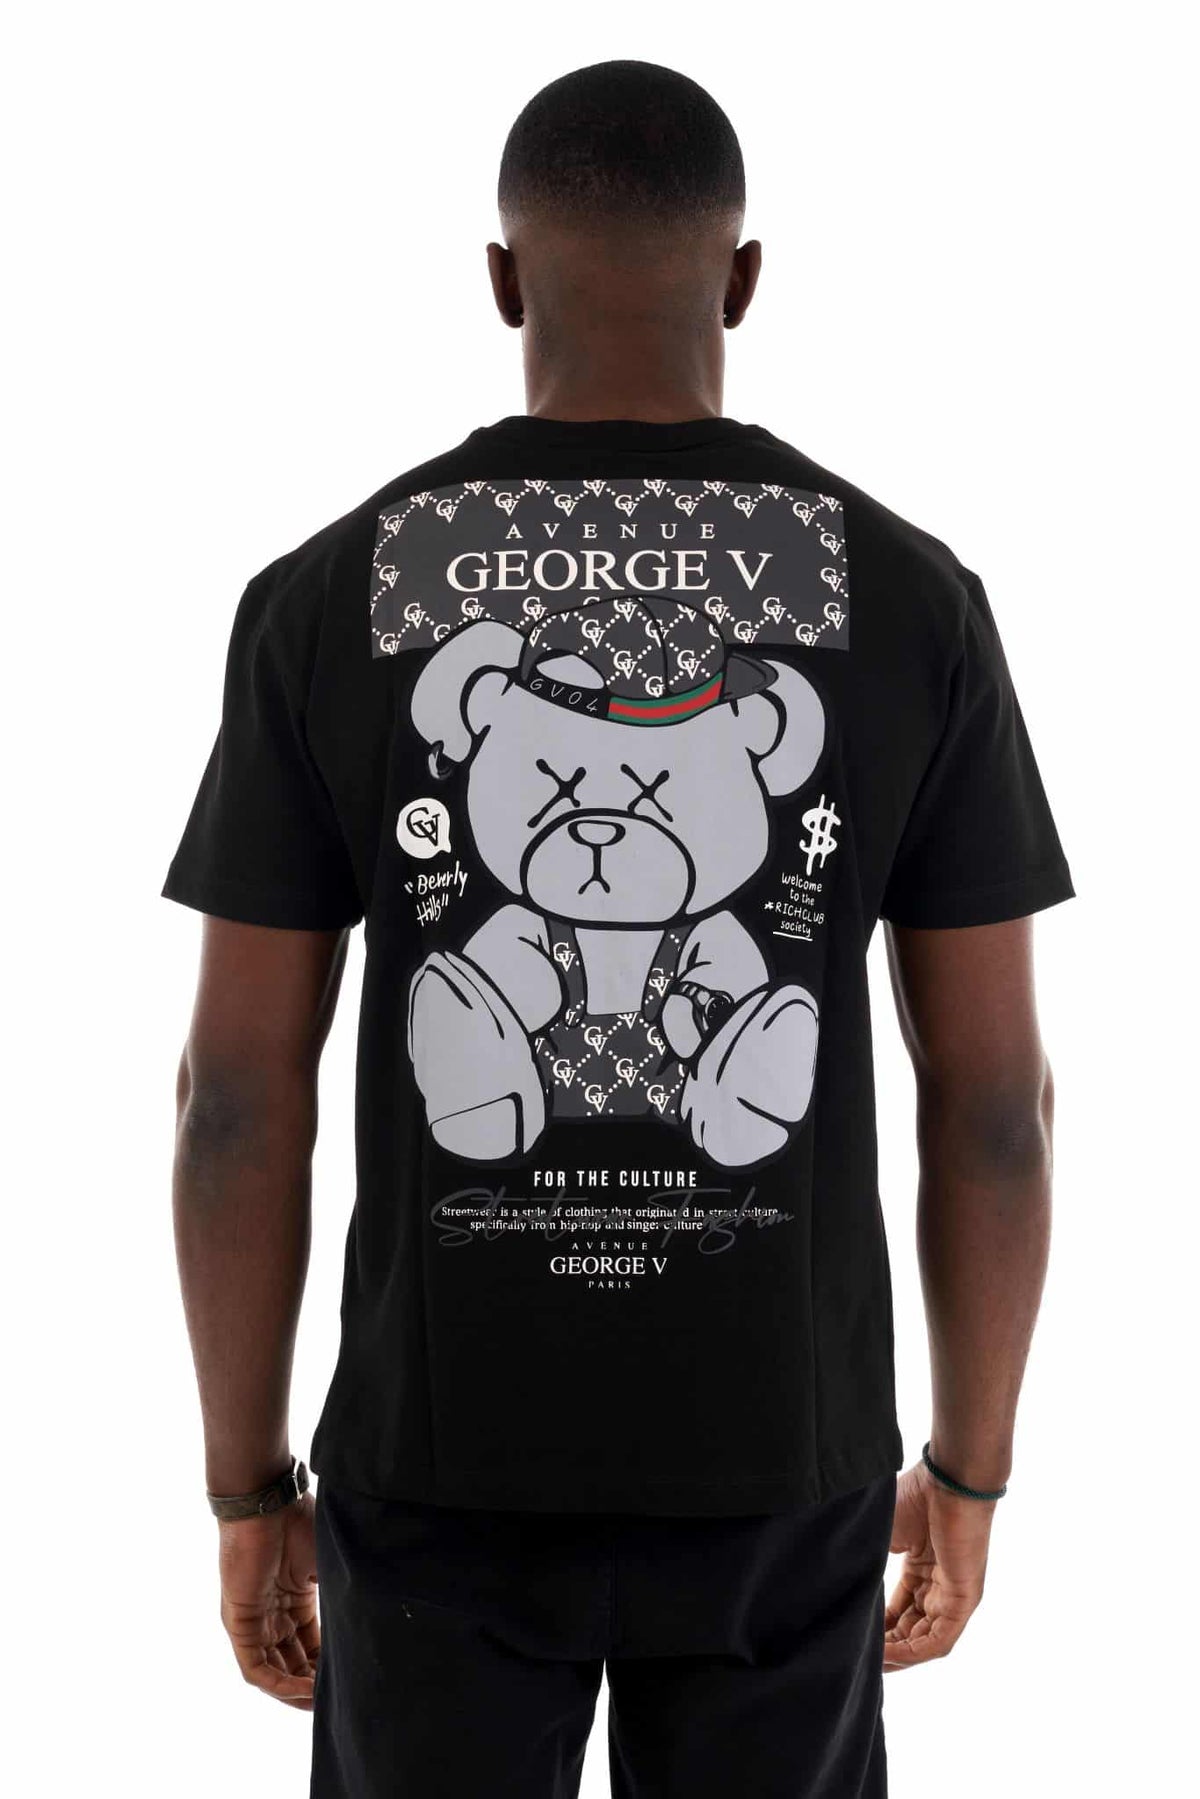 Avenue George V Paris T-Shirt